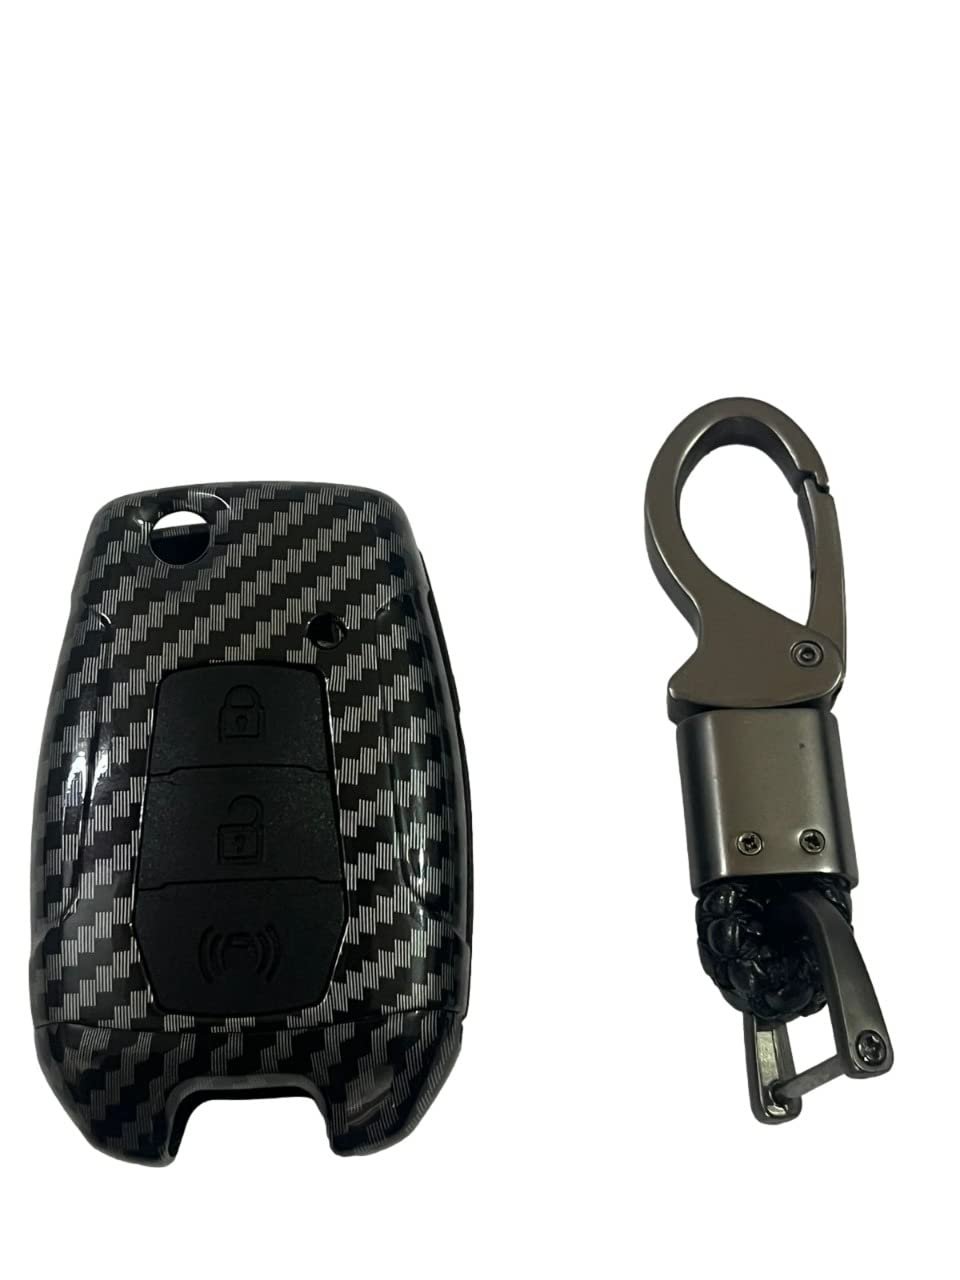 Carbon Fiber Car Key Cover Compatible with Mahindra XUV 300 and Alturas G4 Flip Key (Black) Image 